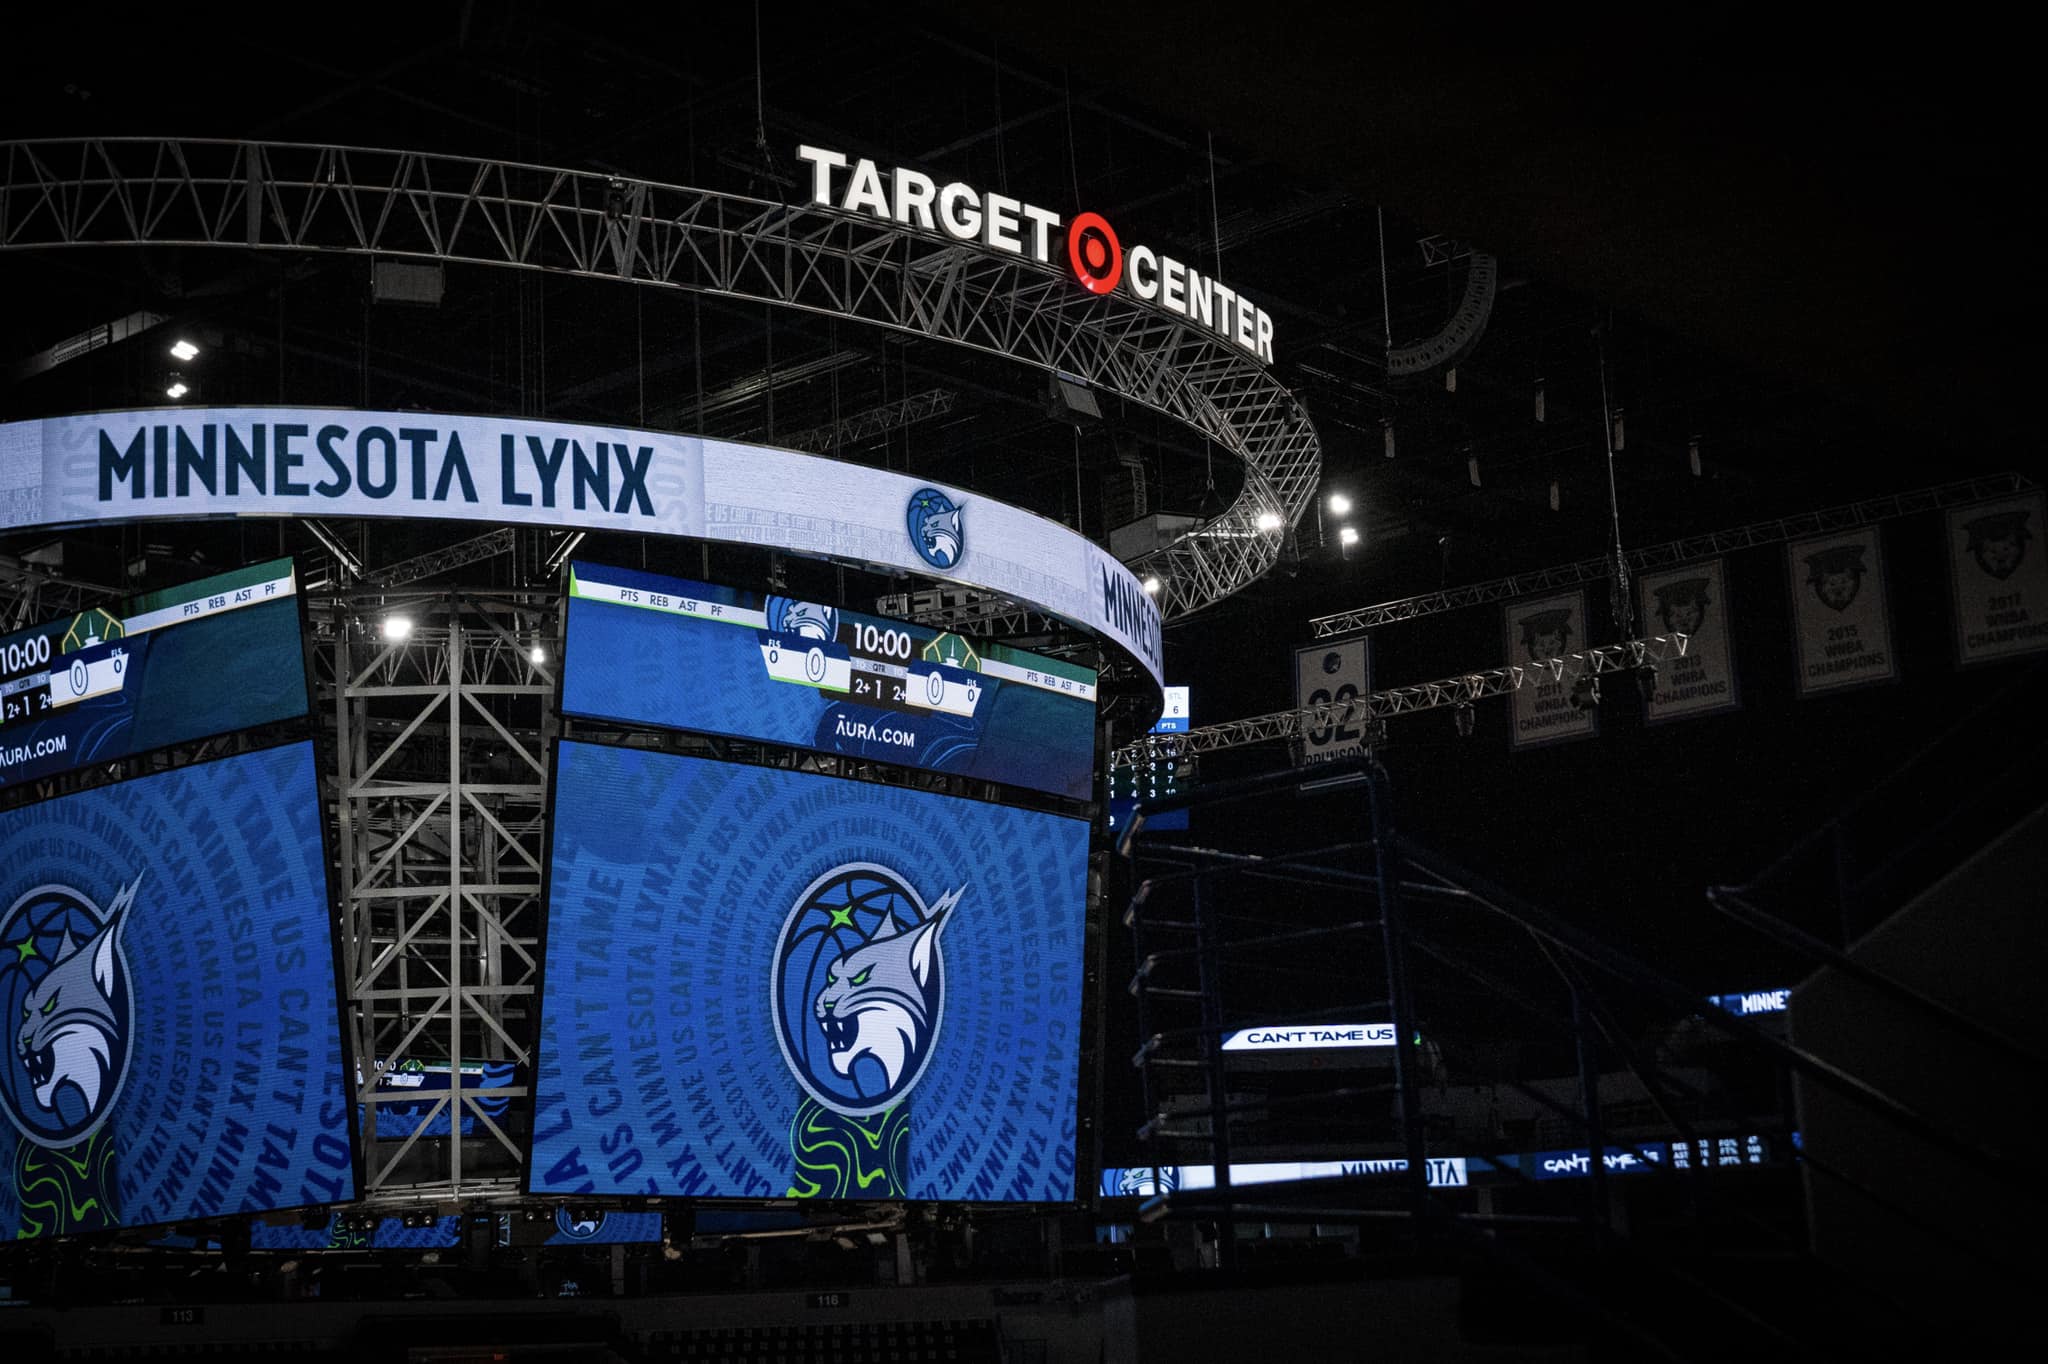 the jumbotron with Minnesota Lynx logo on the screens